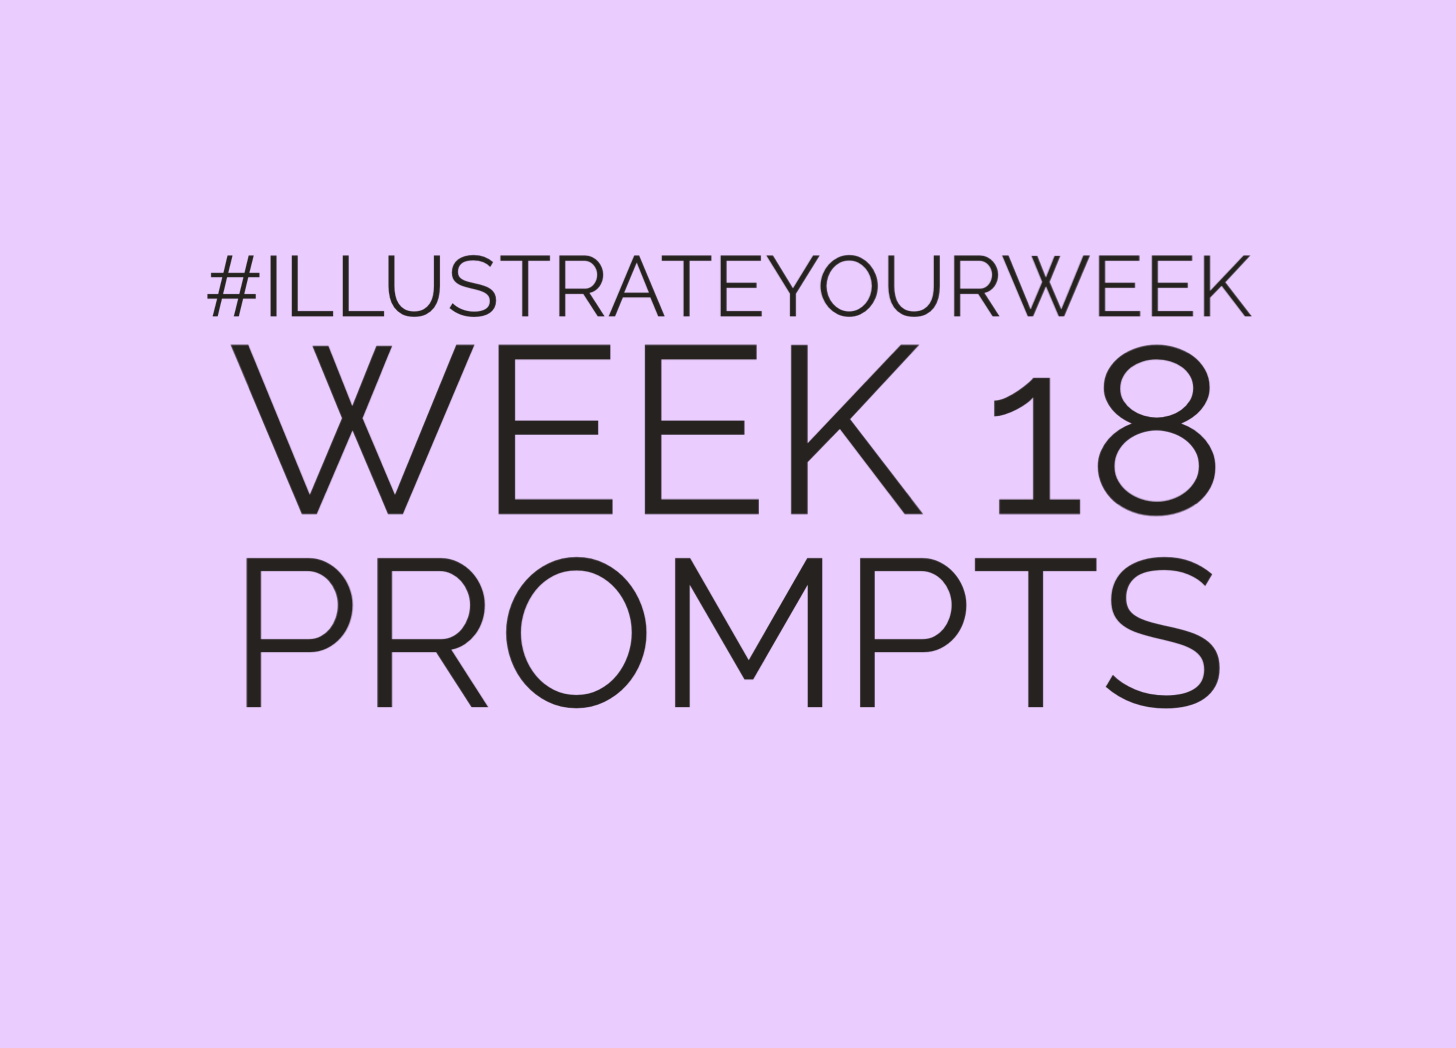 Illustrate Your Week Week 18 Prompts (headline only)